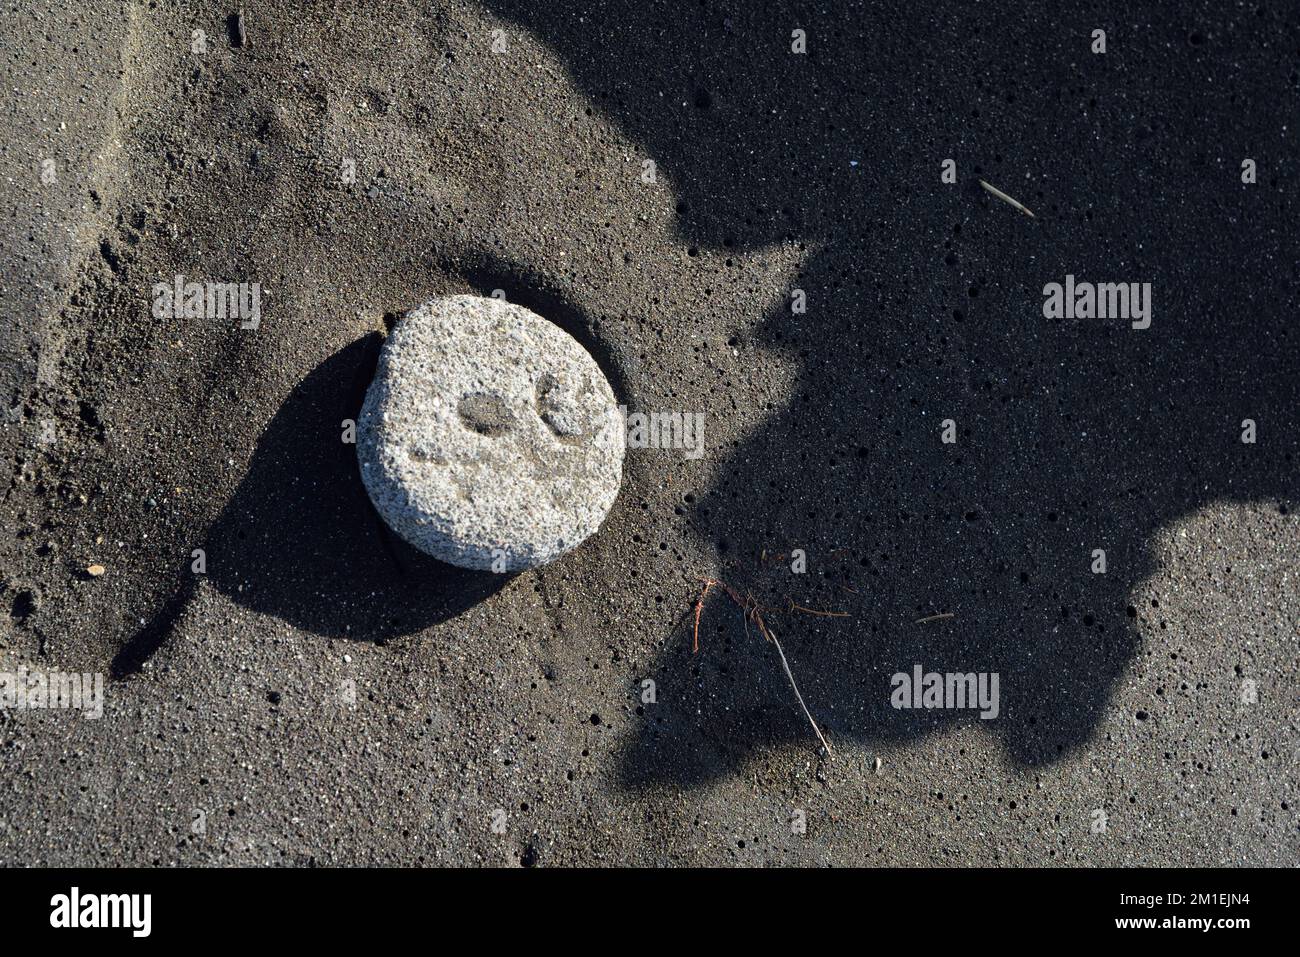 White rock on black beach sand, Survada beach, Valsad, Gujarat, India, Asia Stock Photo